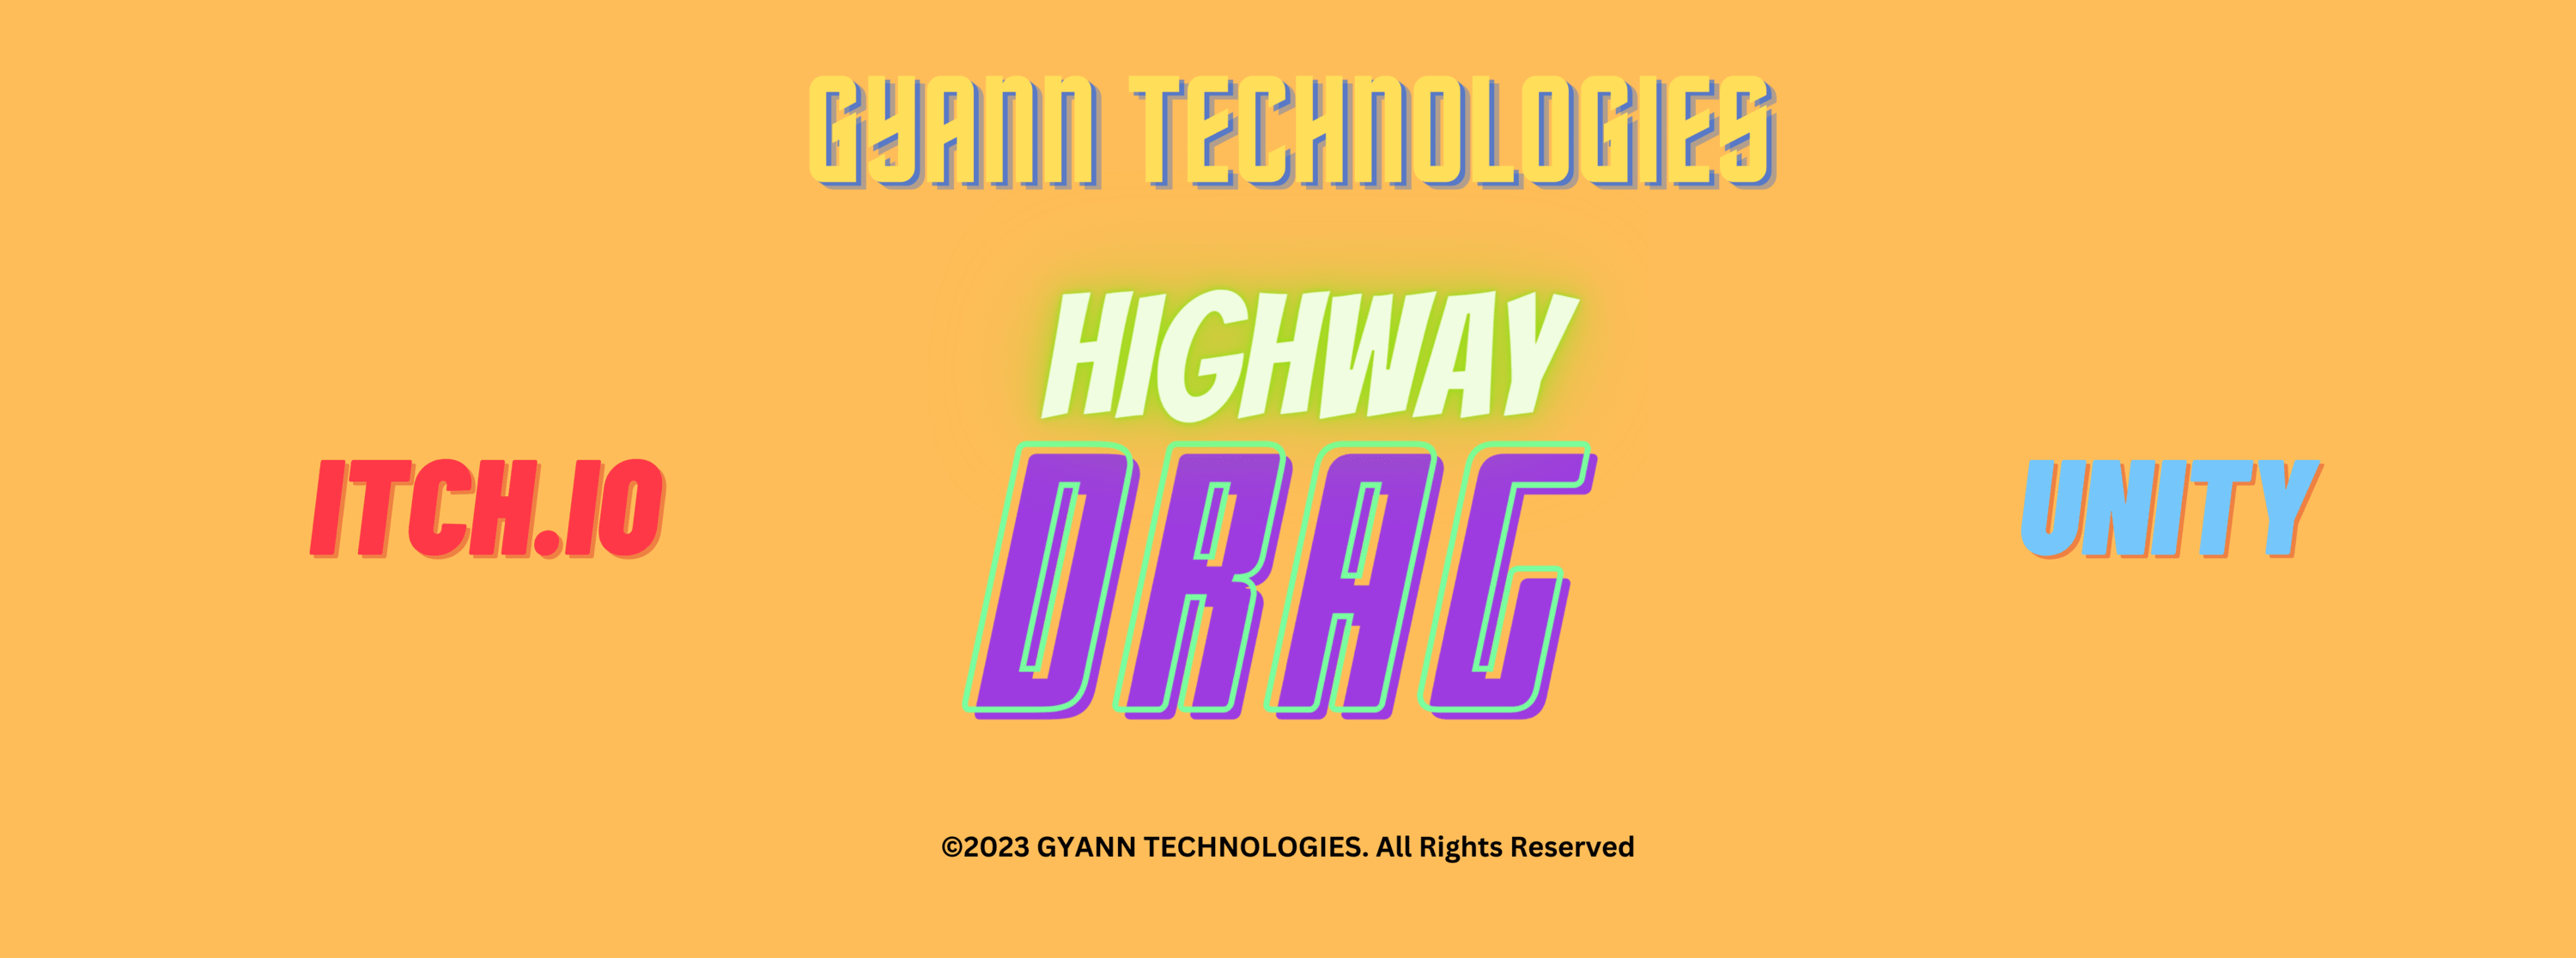 Highway Drag